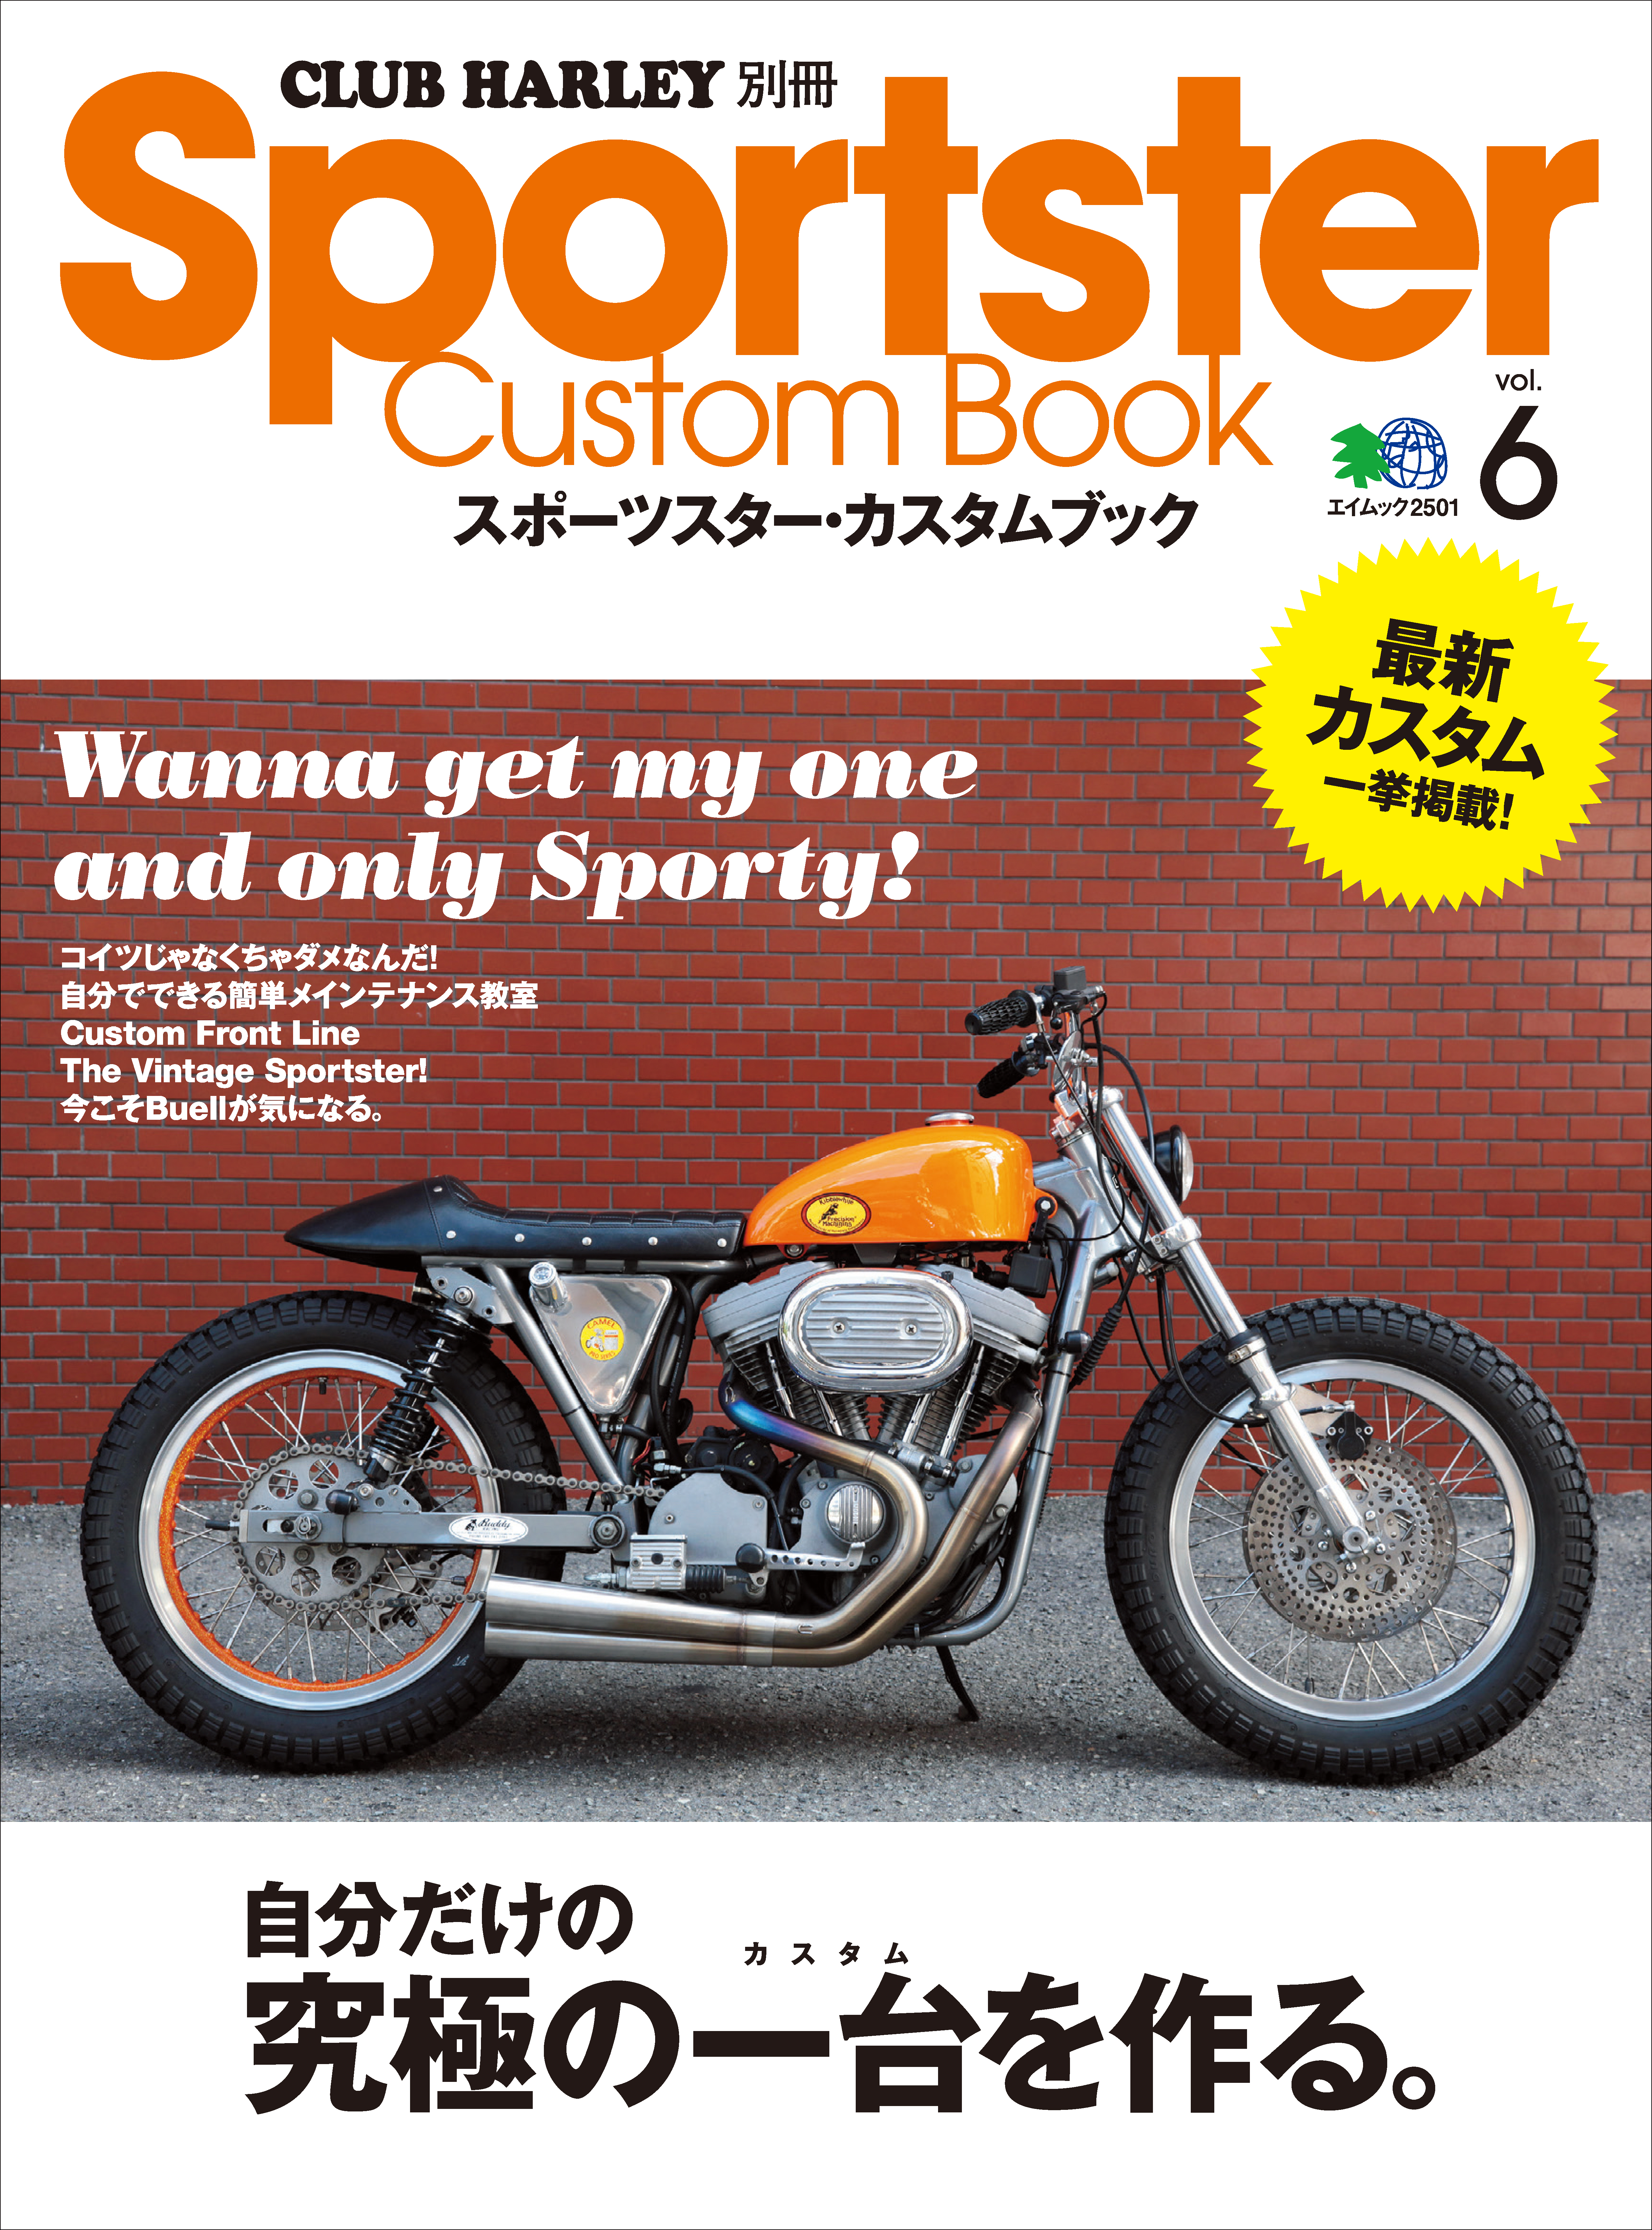 Sportster Custom Book Vol.6 - クラブハーレー編集部 - 漫画・無料